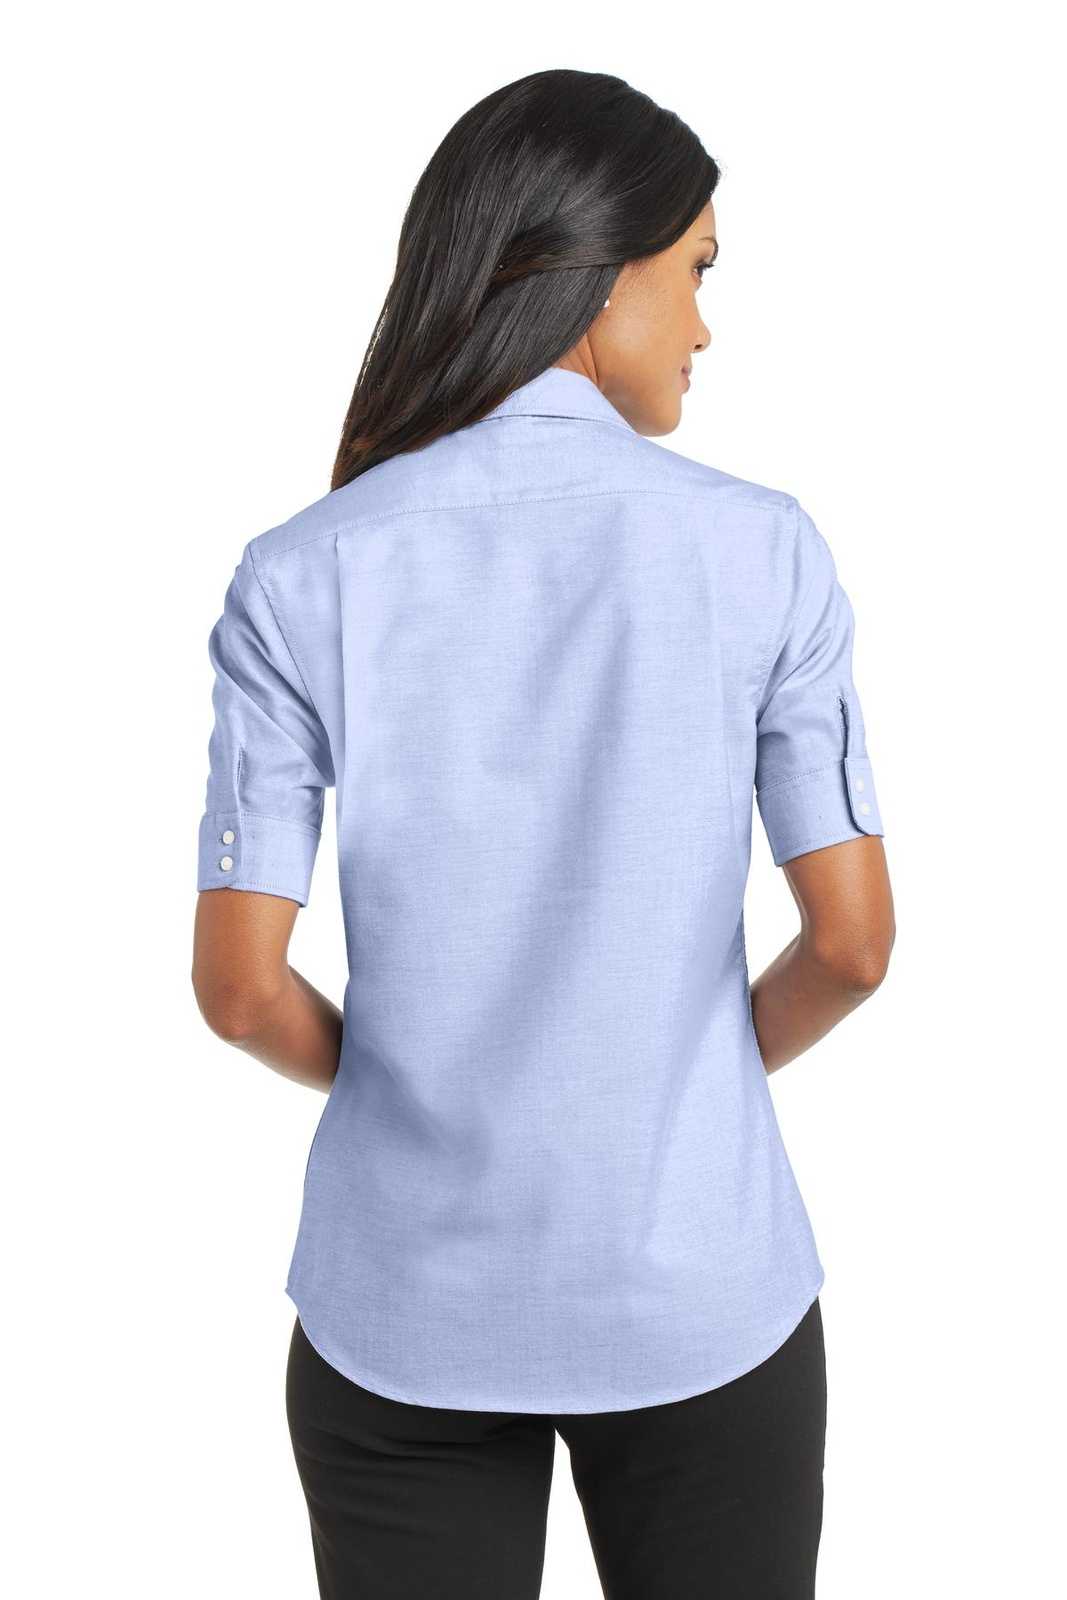 Port Authority L659 Ladies Short Sleeve Superpro Oxford Shirt - Oxford Blue - HIT a Double - 2